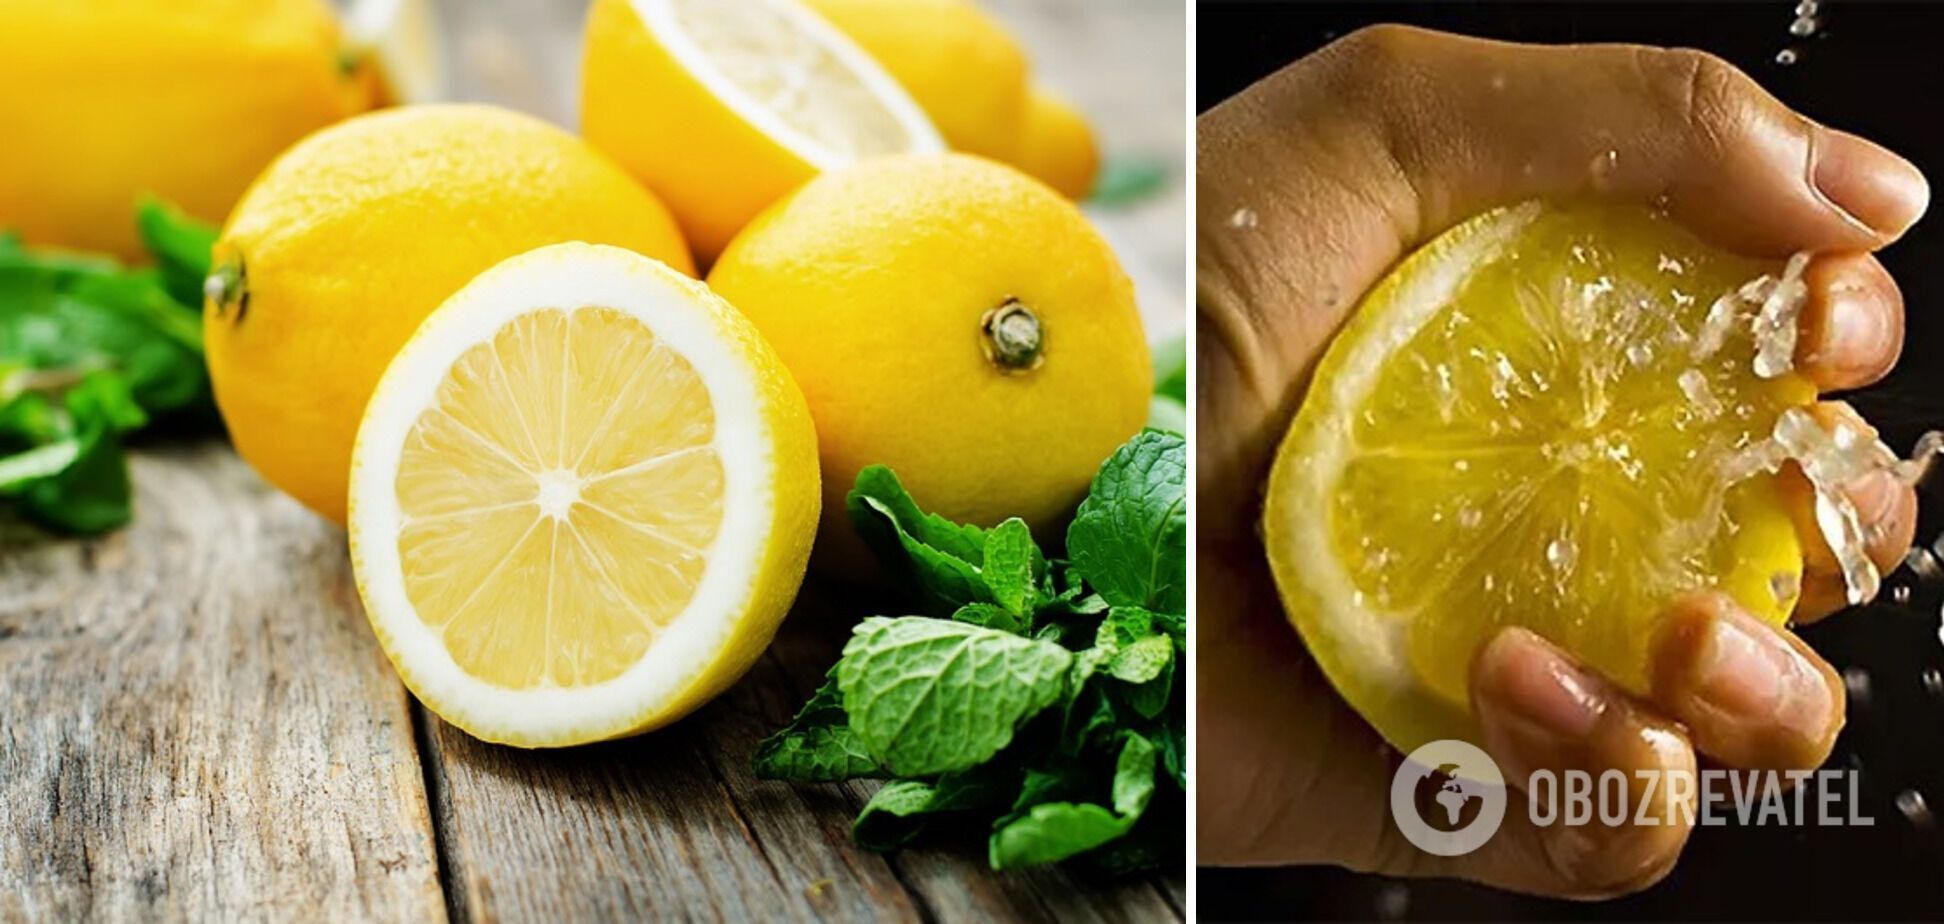 Lemon and lemon juice